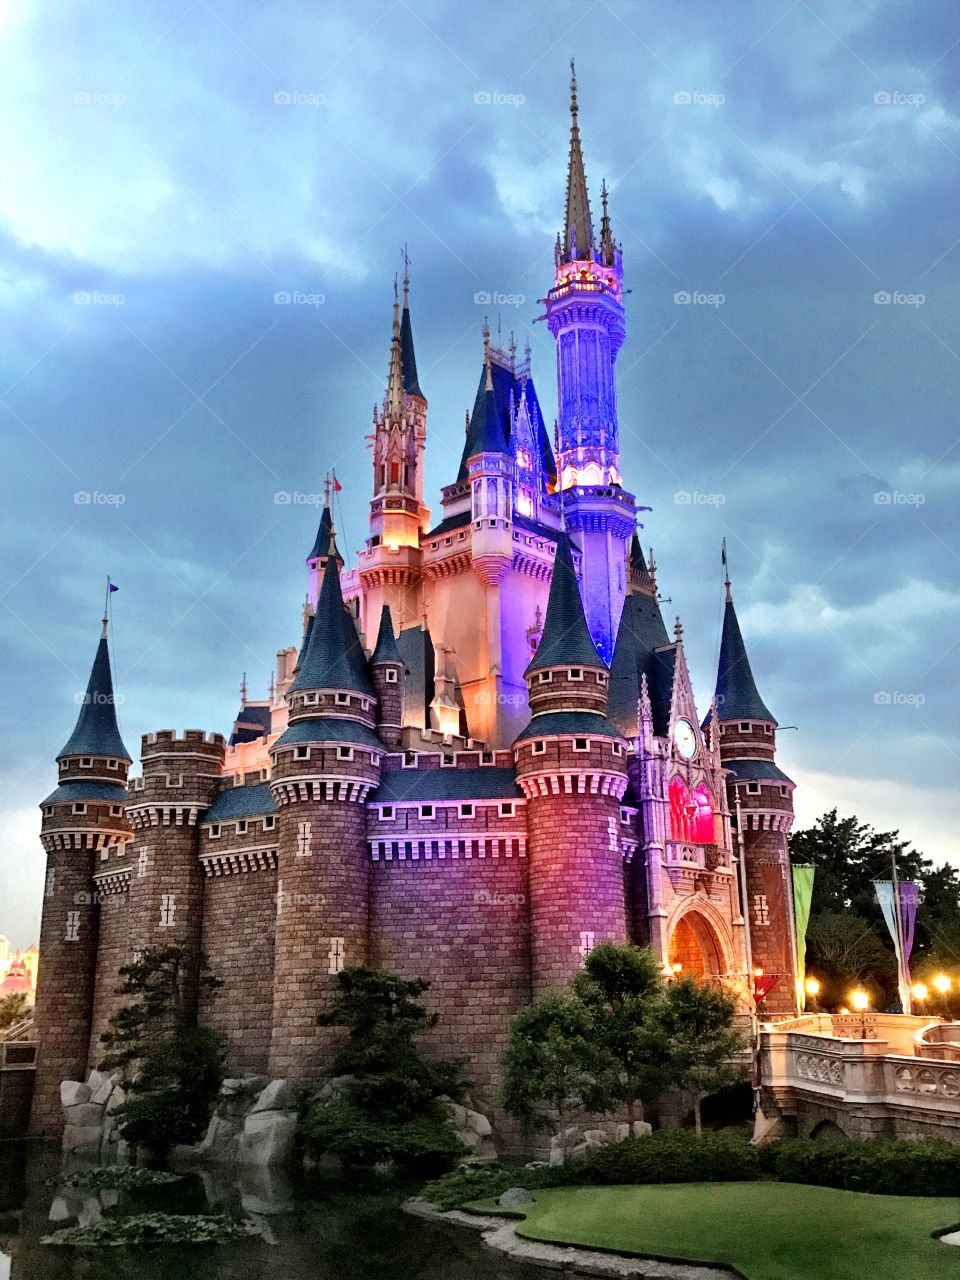 Tokyo Disney Land Resort Cinderella Castle light up